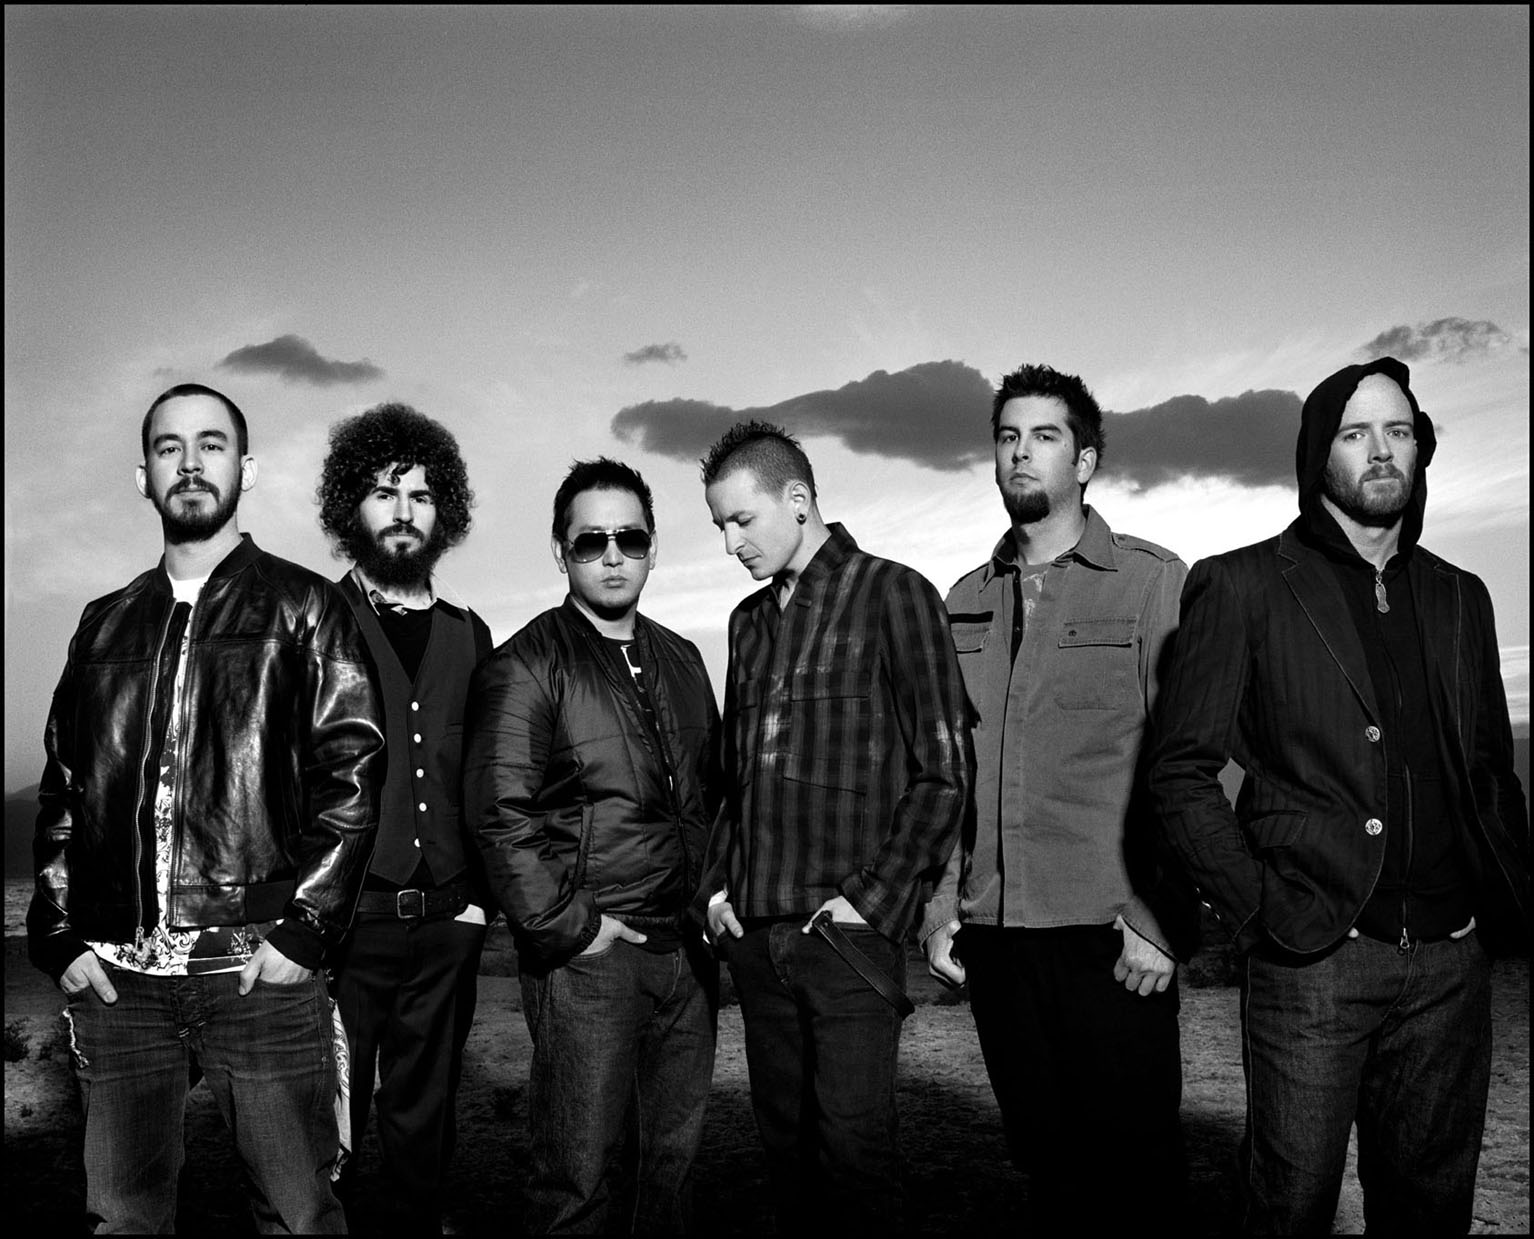 Linkin Park - Images Colection